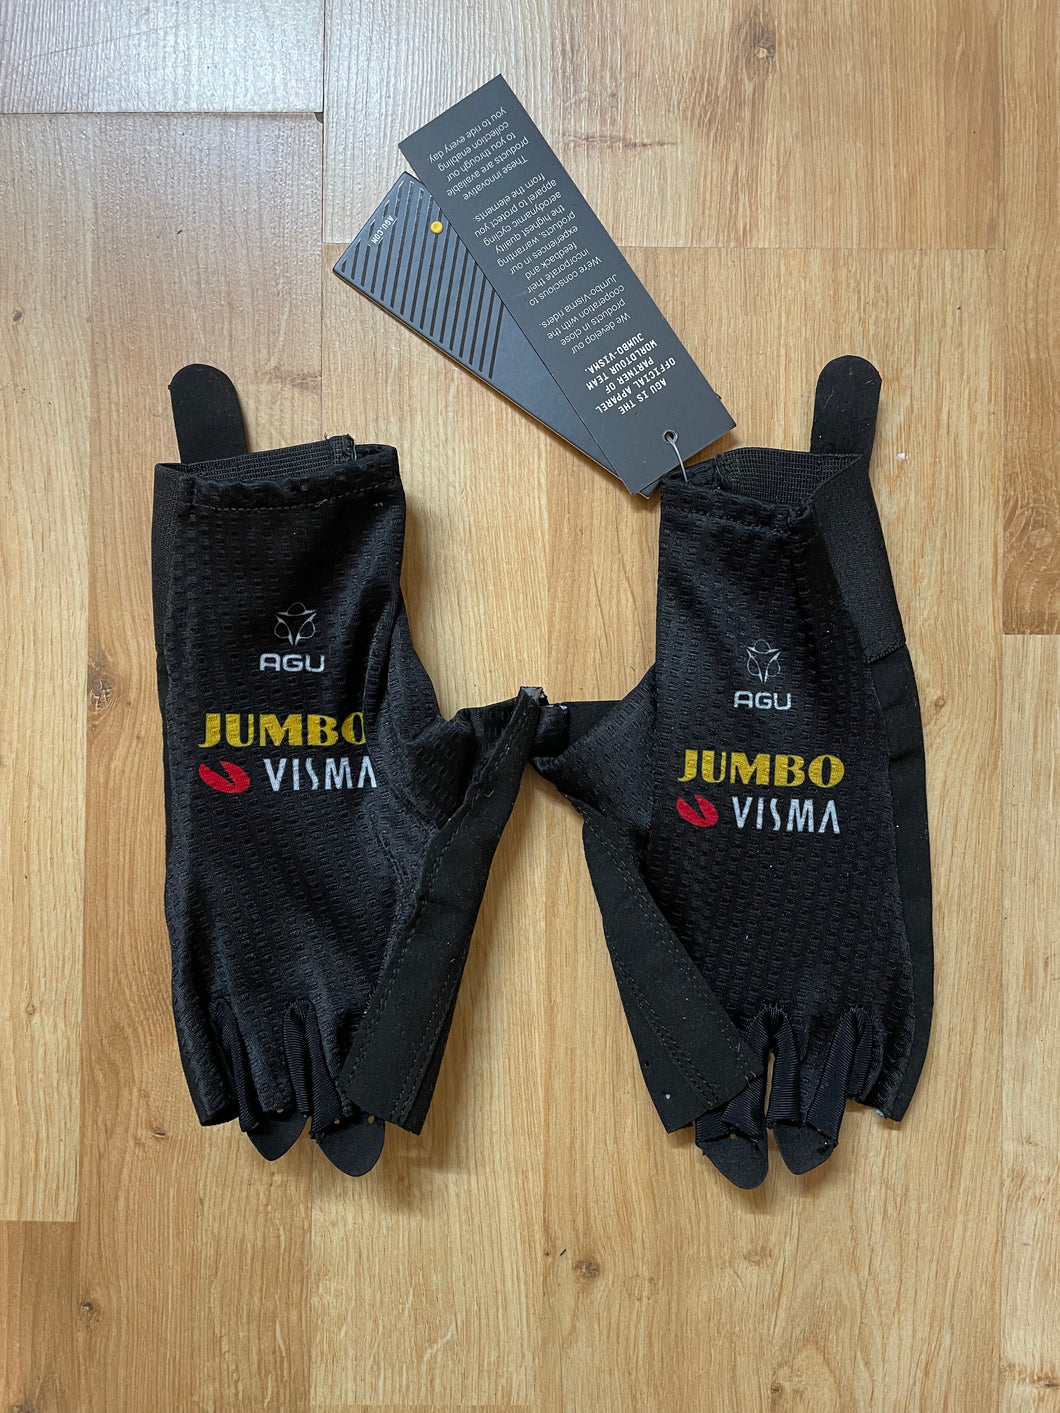 Team Jumbo Visma | AGU Premium Aero Gloves TT No padding “Groenewegen”